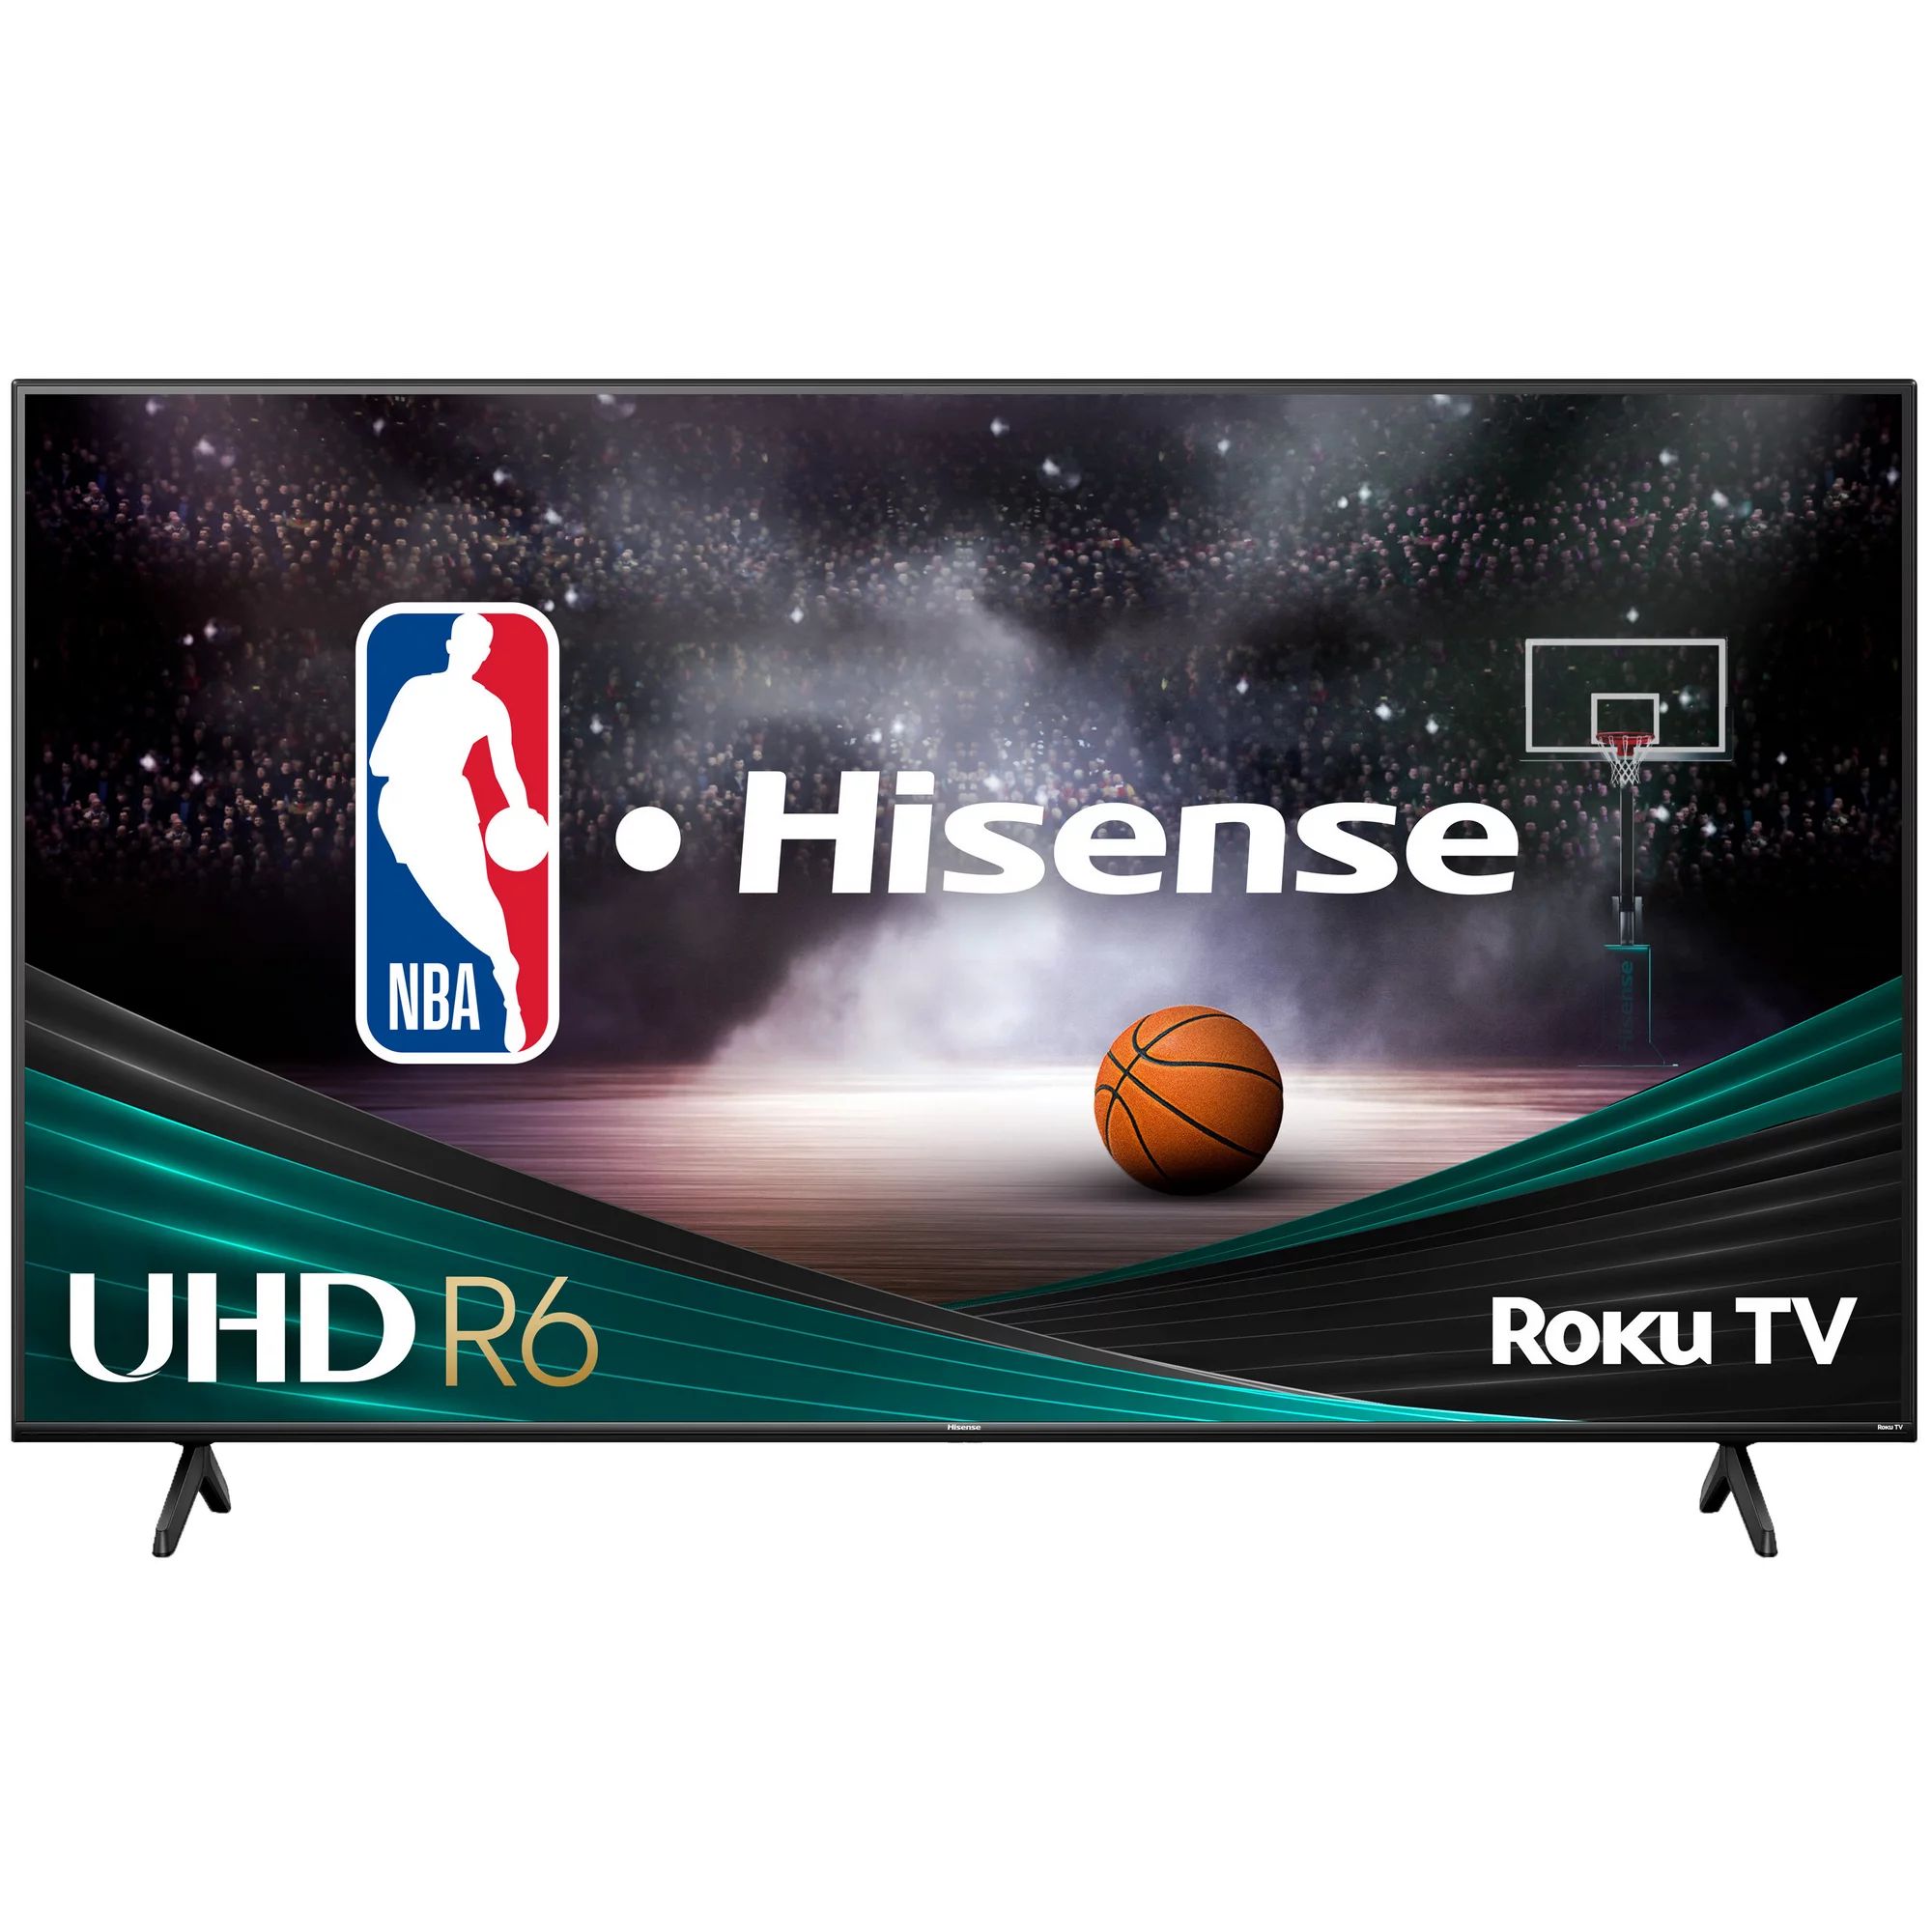 Hisense 58" Class 4K UHD LED LCD Roku Smart TV HDR R6 Series 58R6E3 | Walmart (US)